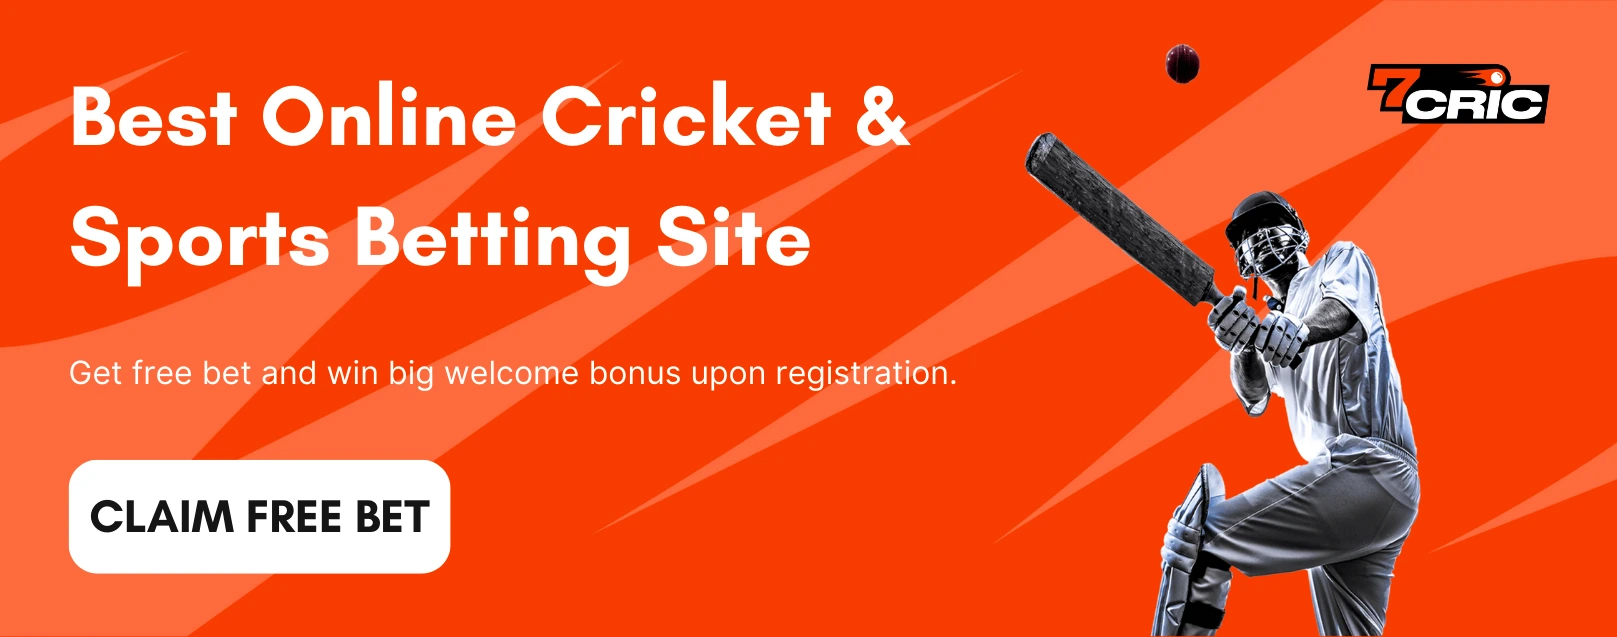 India bet cricket / cricket betting sites